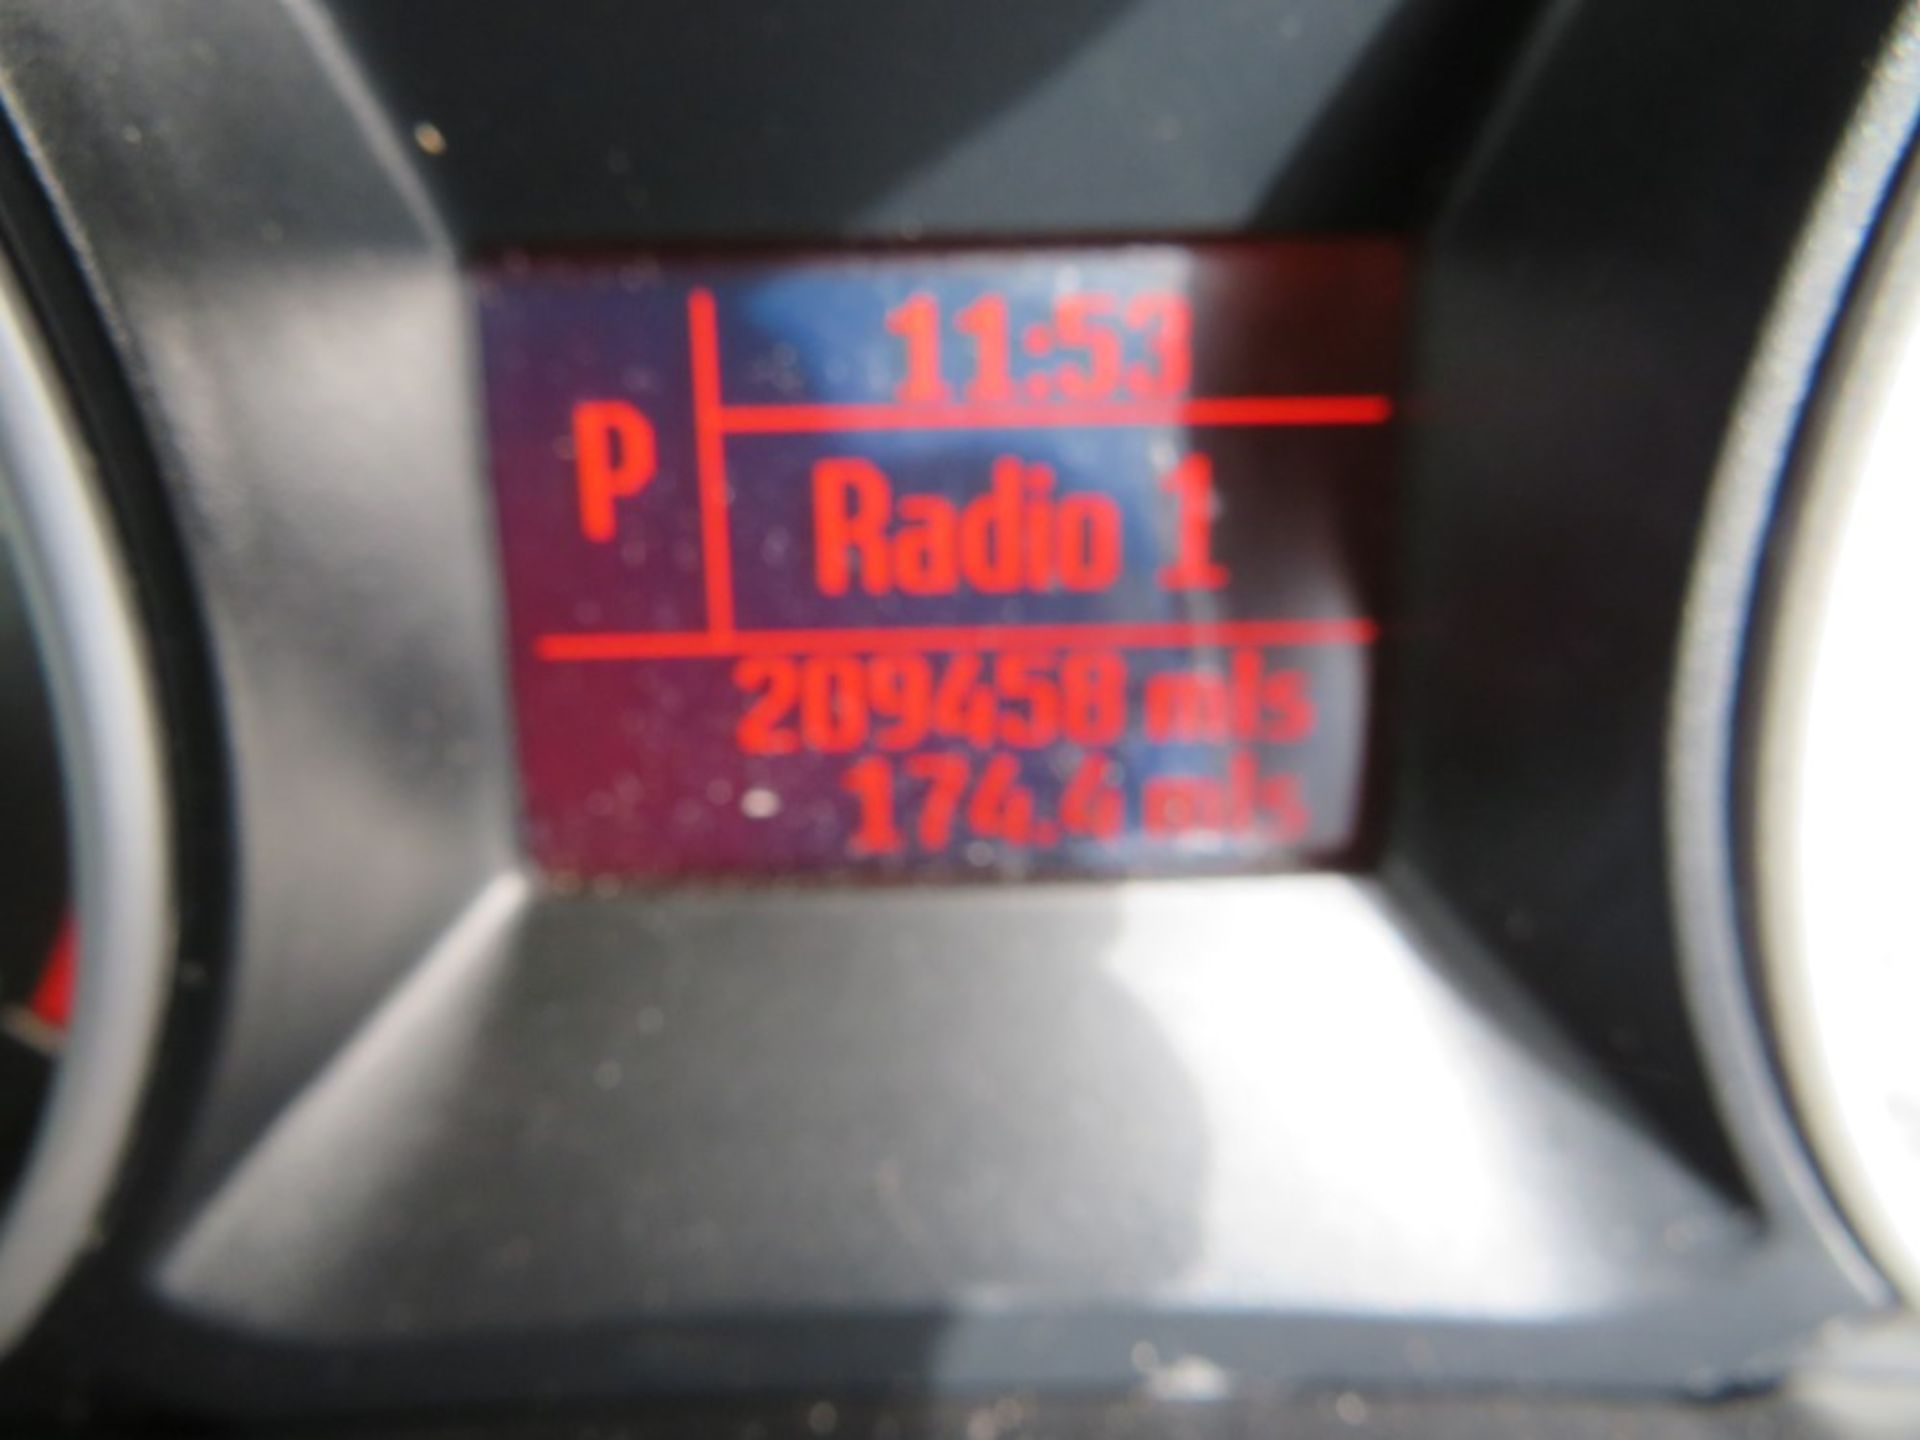 15 reg FORD GALAXY ZETEC TDCI AUTO (ON VCAR) 1ST REG 06/15, TEST 07/21, 209458M, V5 HERE, 5 FORMER - Image 6 of 6